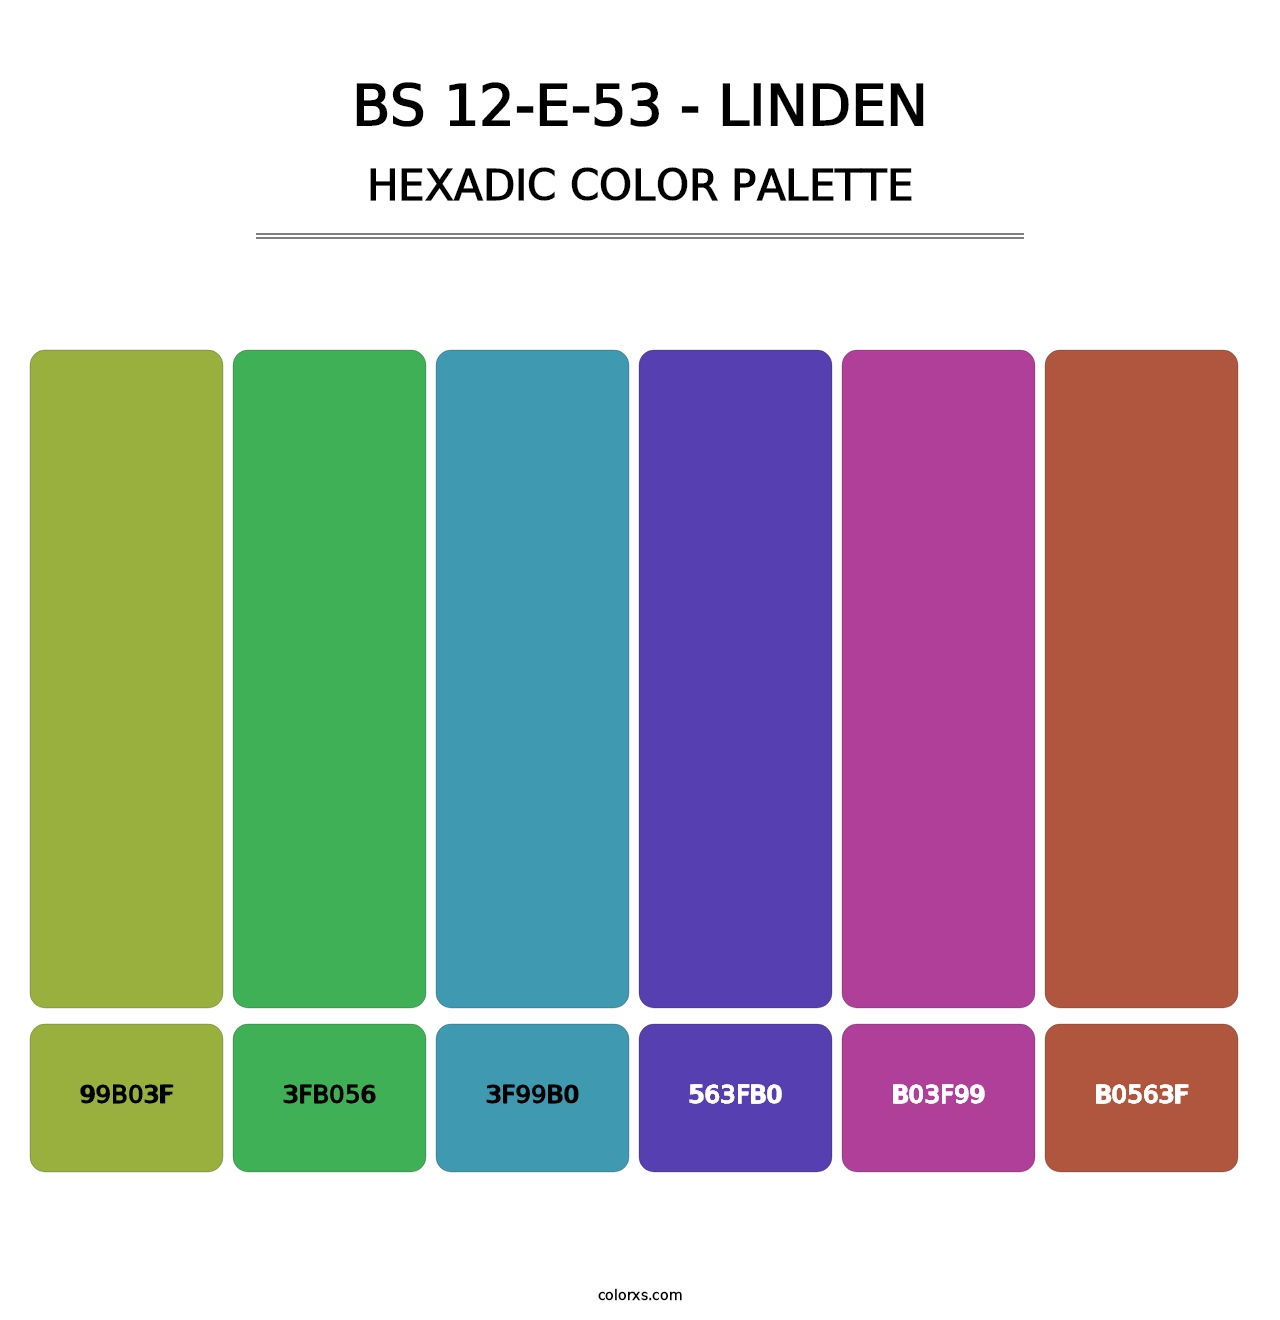 BS 12-E-53 - Linden - Hexadic Color Palette